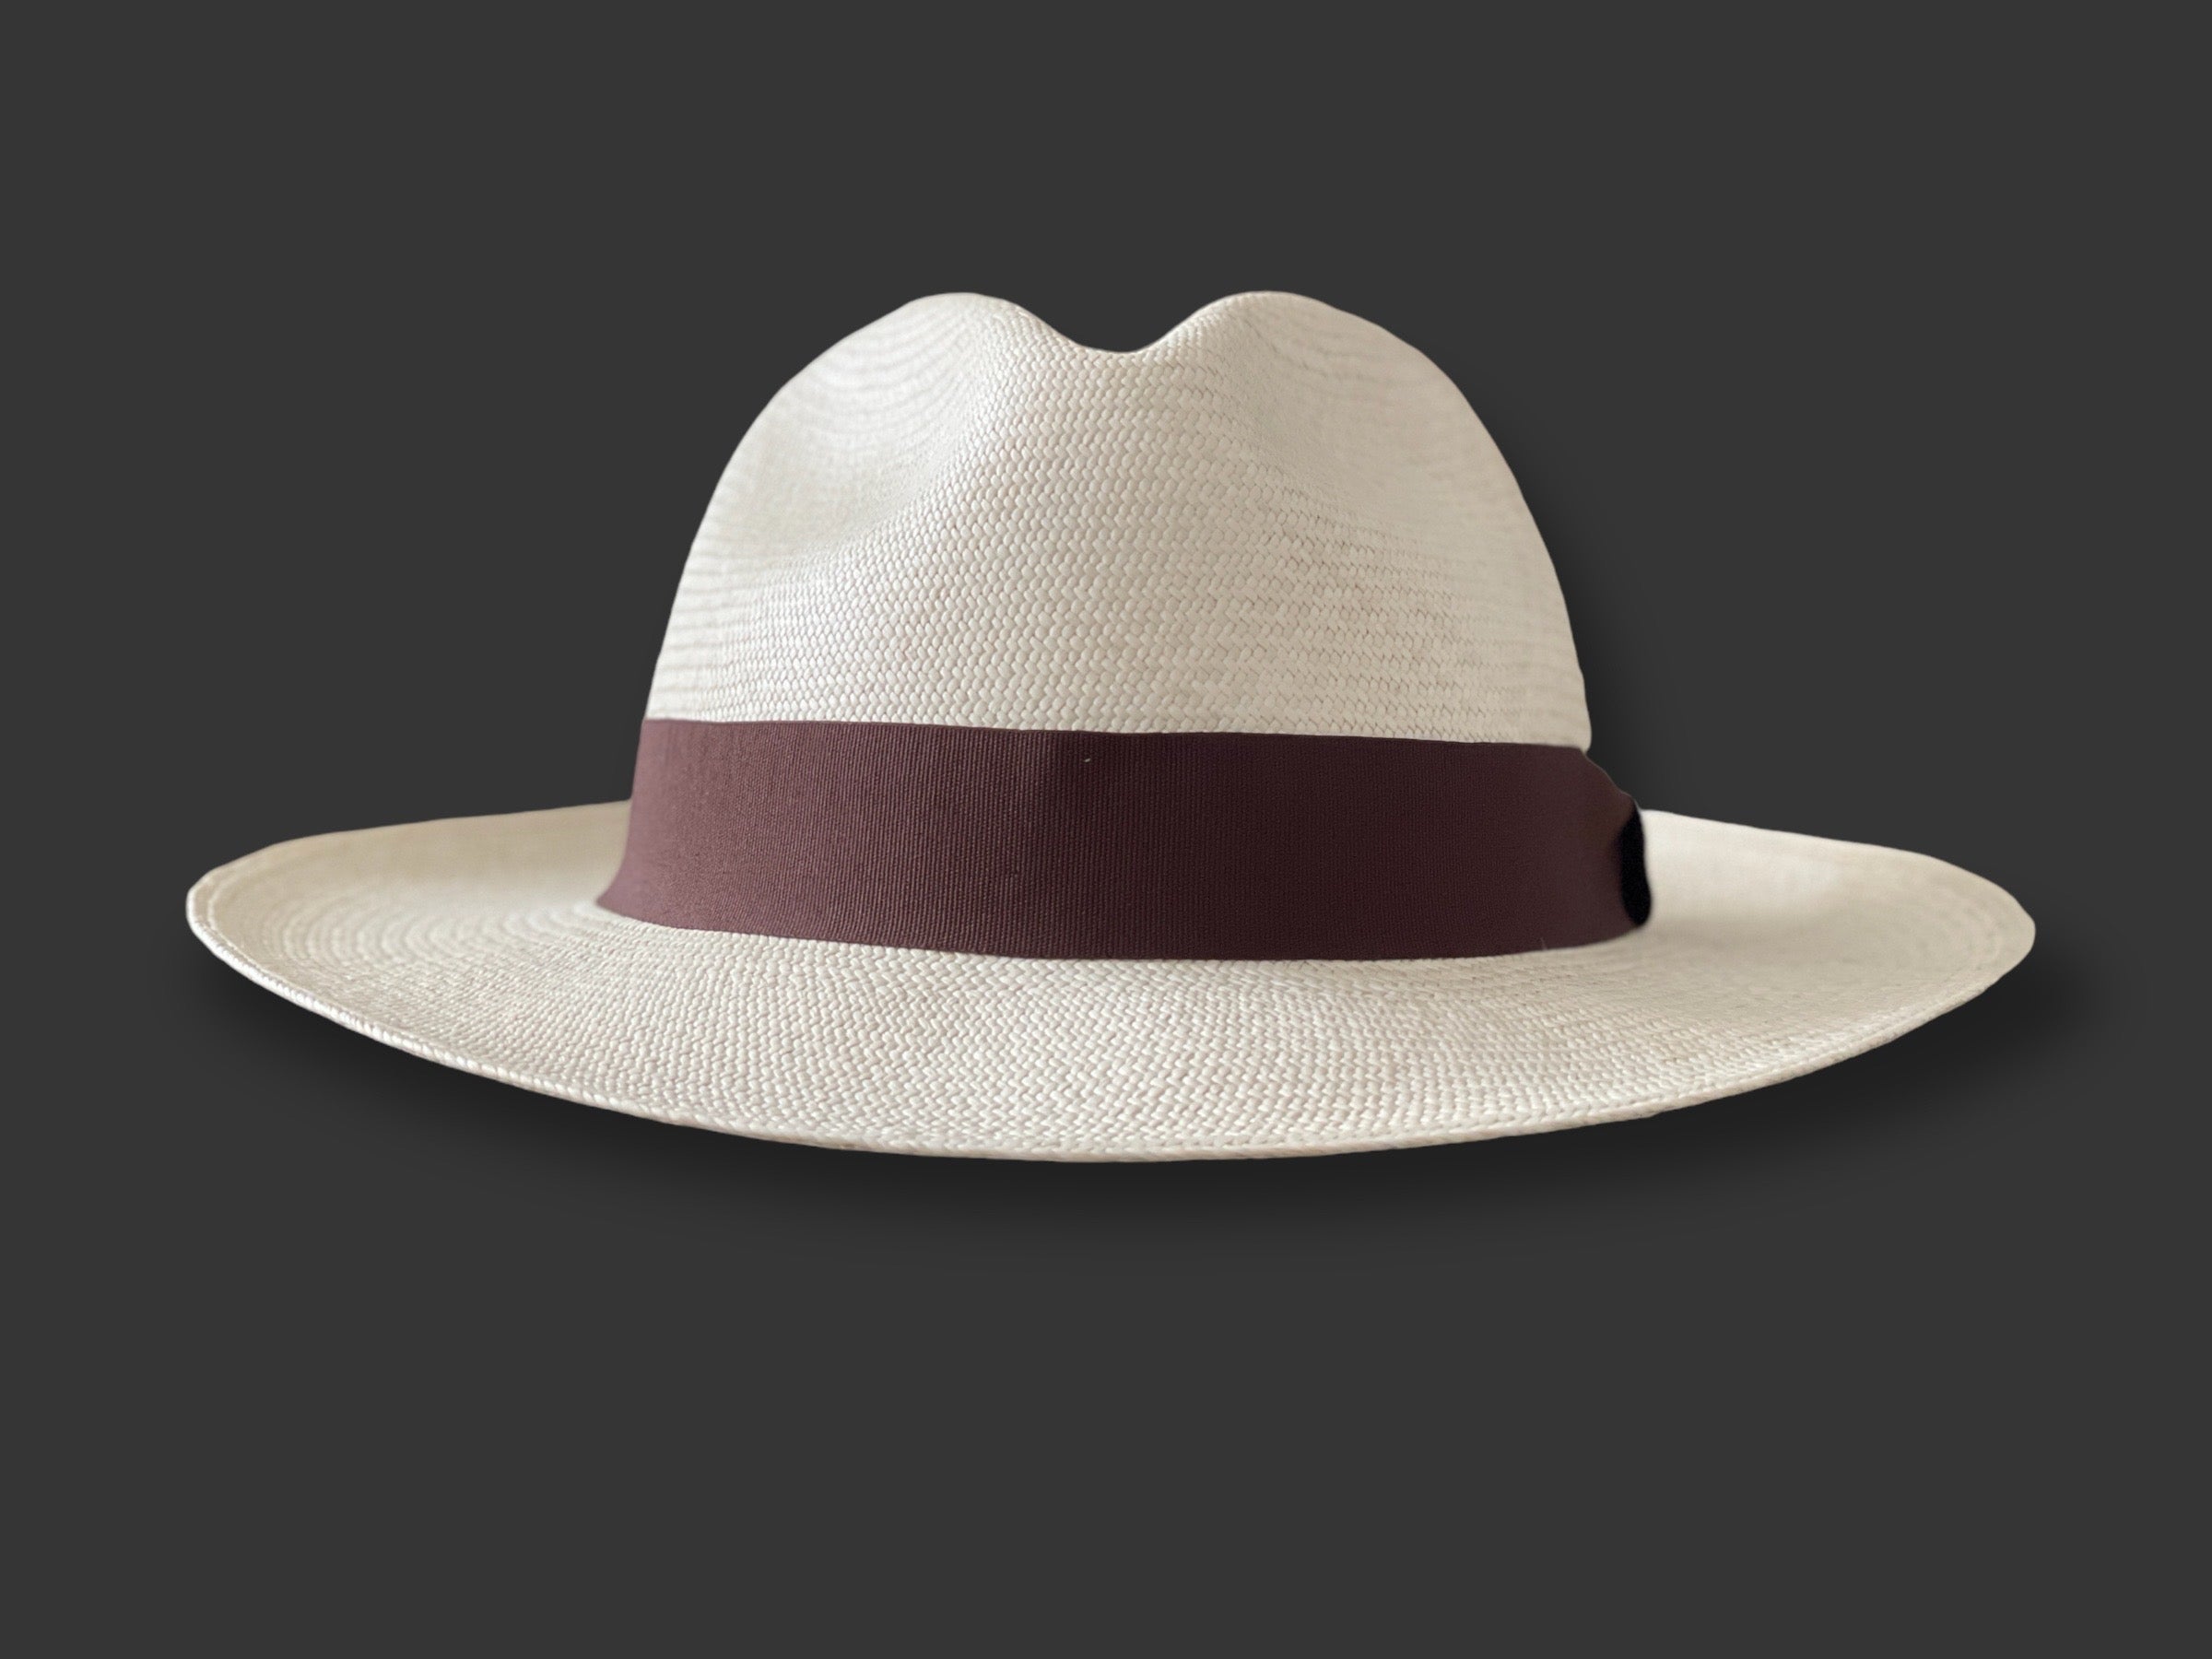 Genuine Panama hat from Ecuador model Trevil